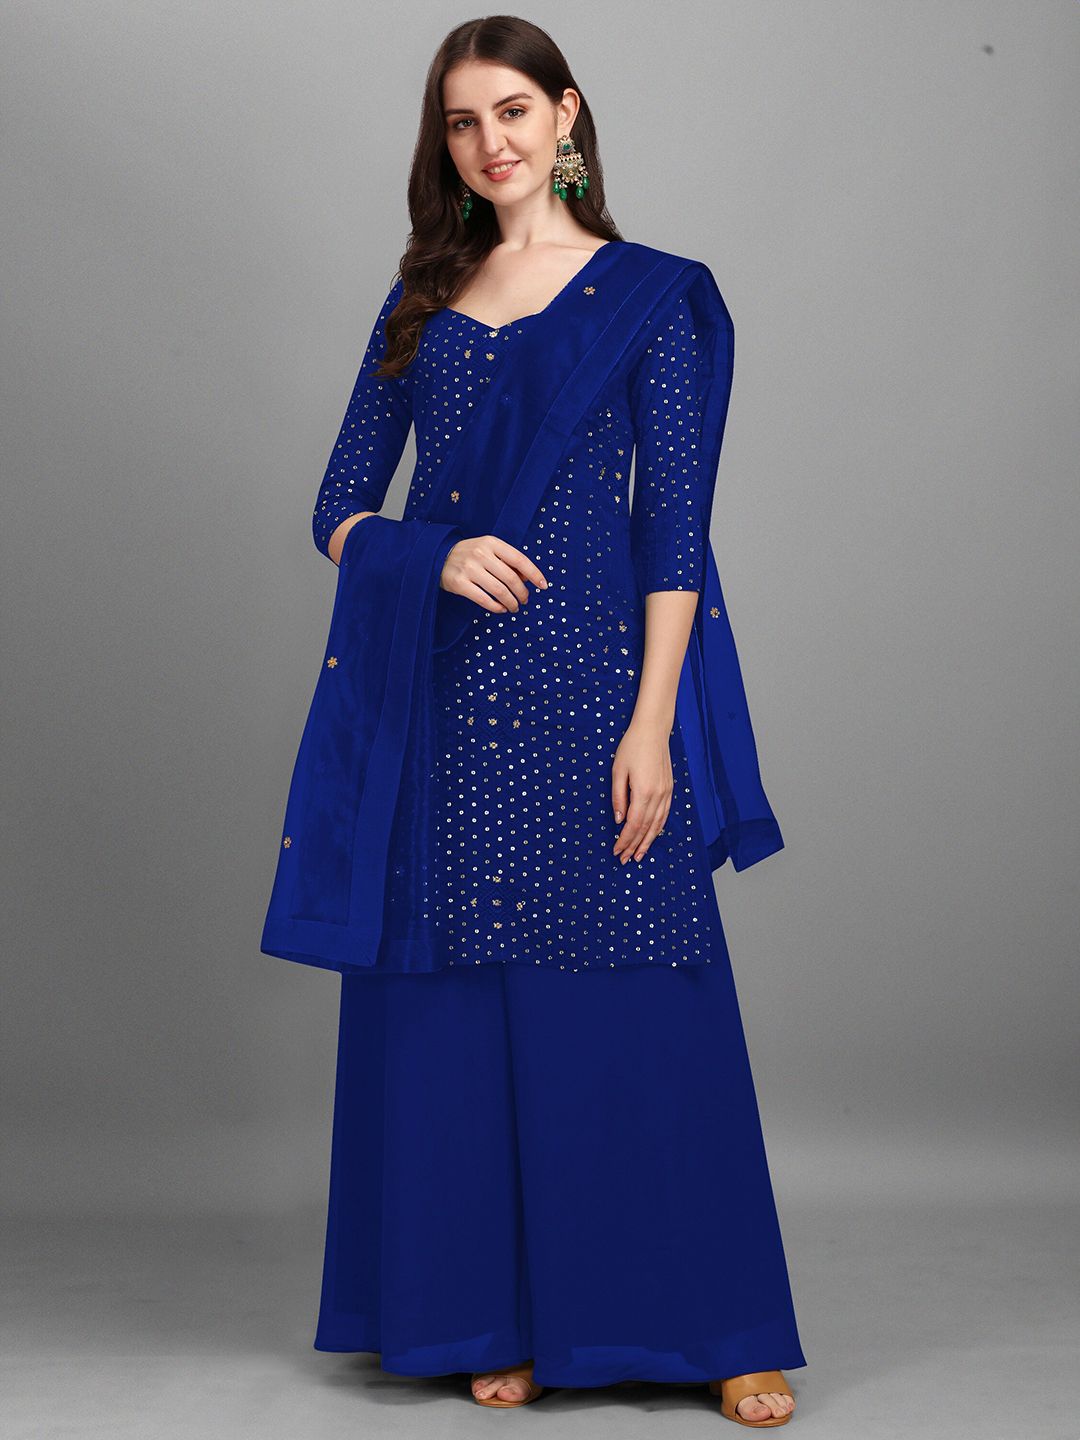 Fashionuma Blue Embroidered Semi-Stitched Dress Material Price in India